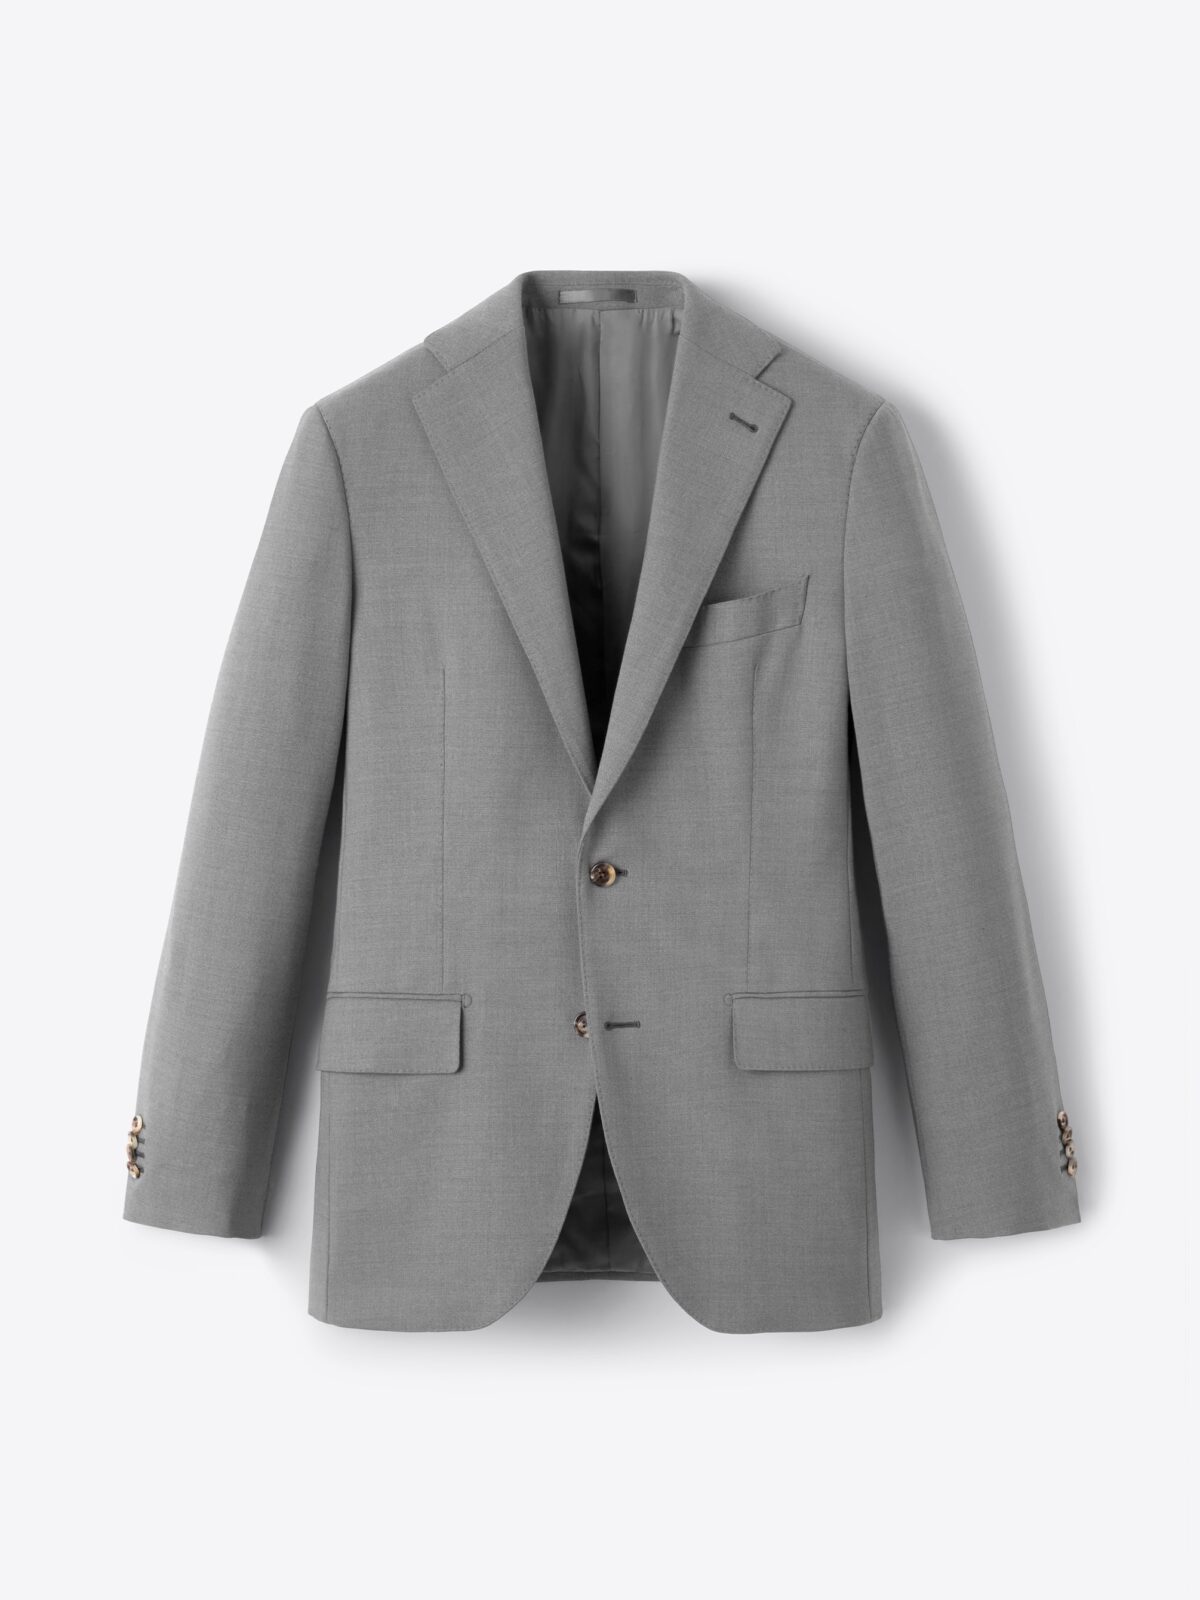 Grey Melange Allen Suit with Side Tab Dress Pants